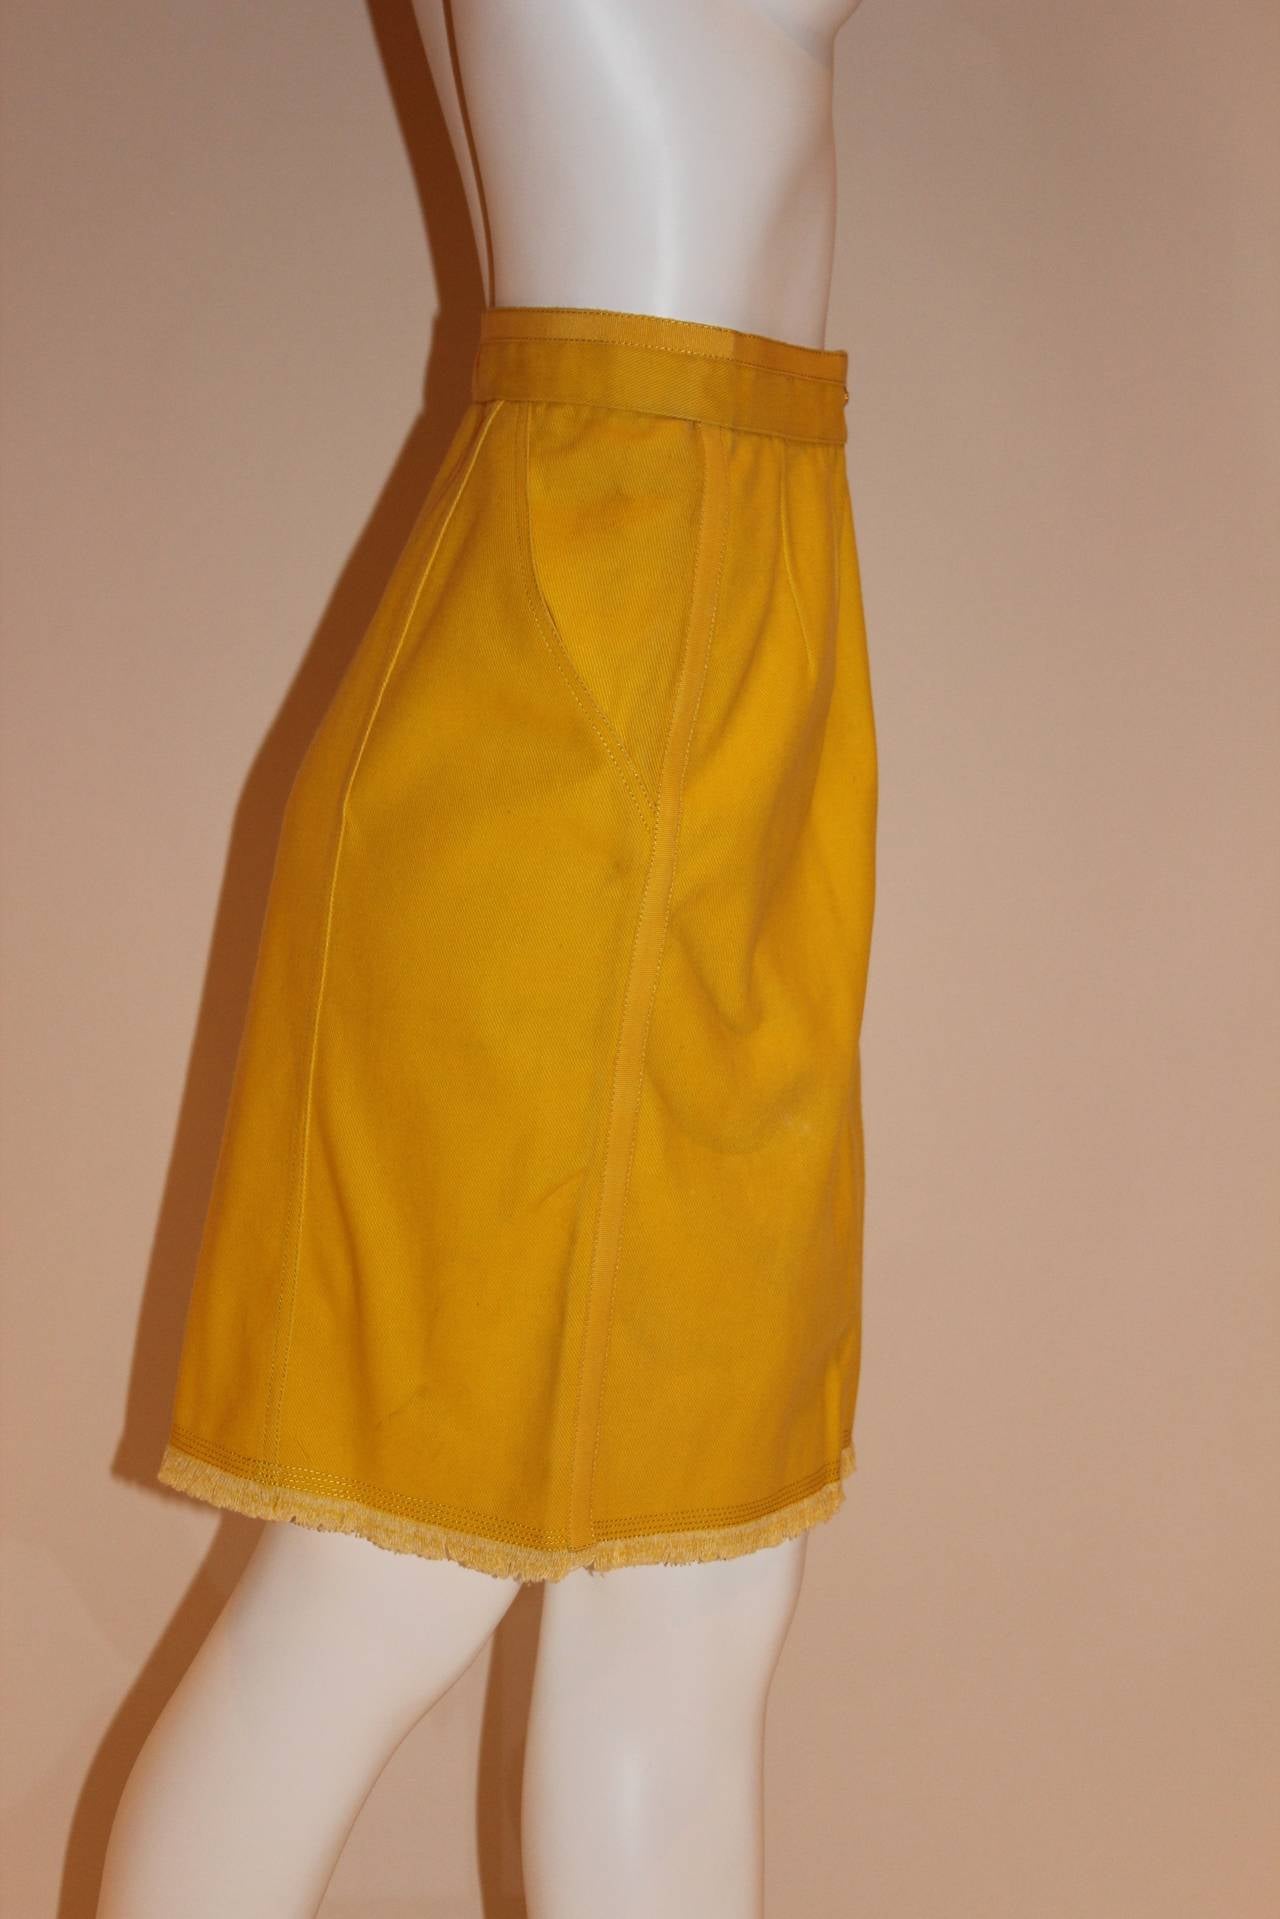 Chanel Yellow Skirt 1